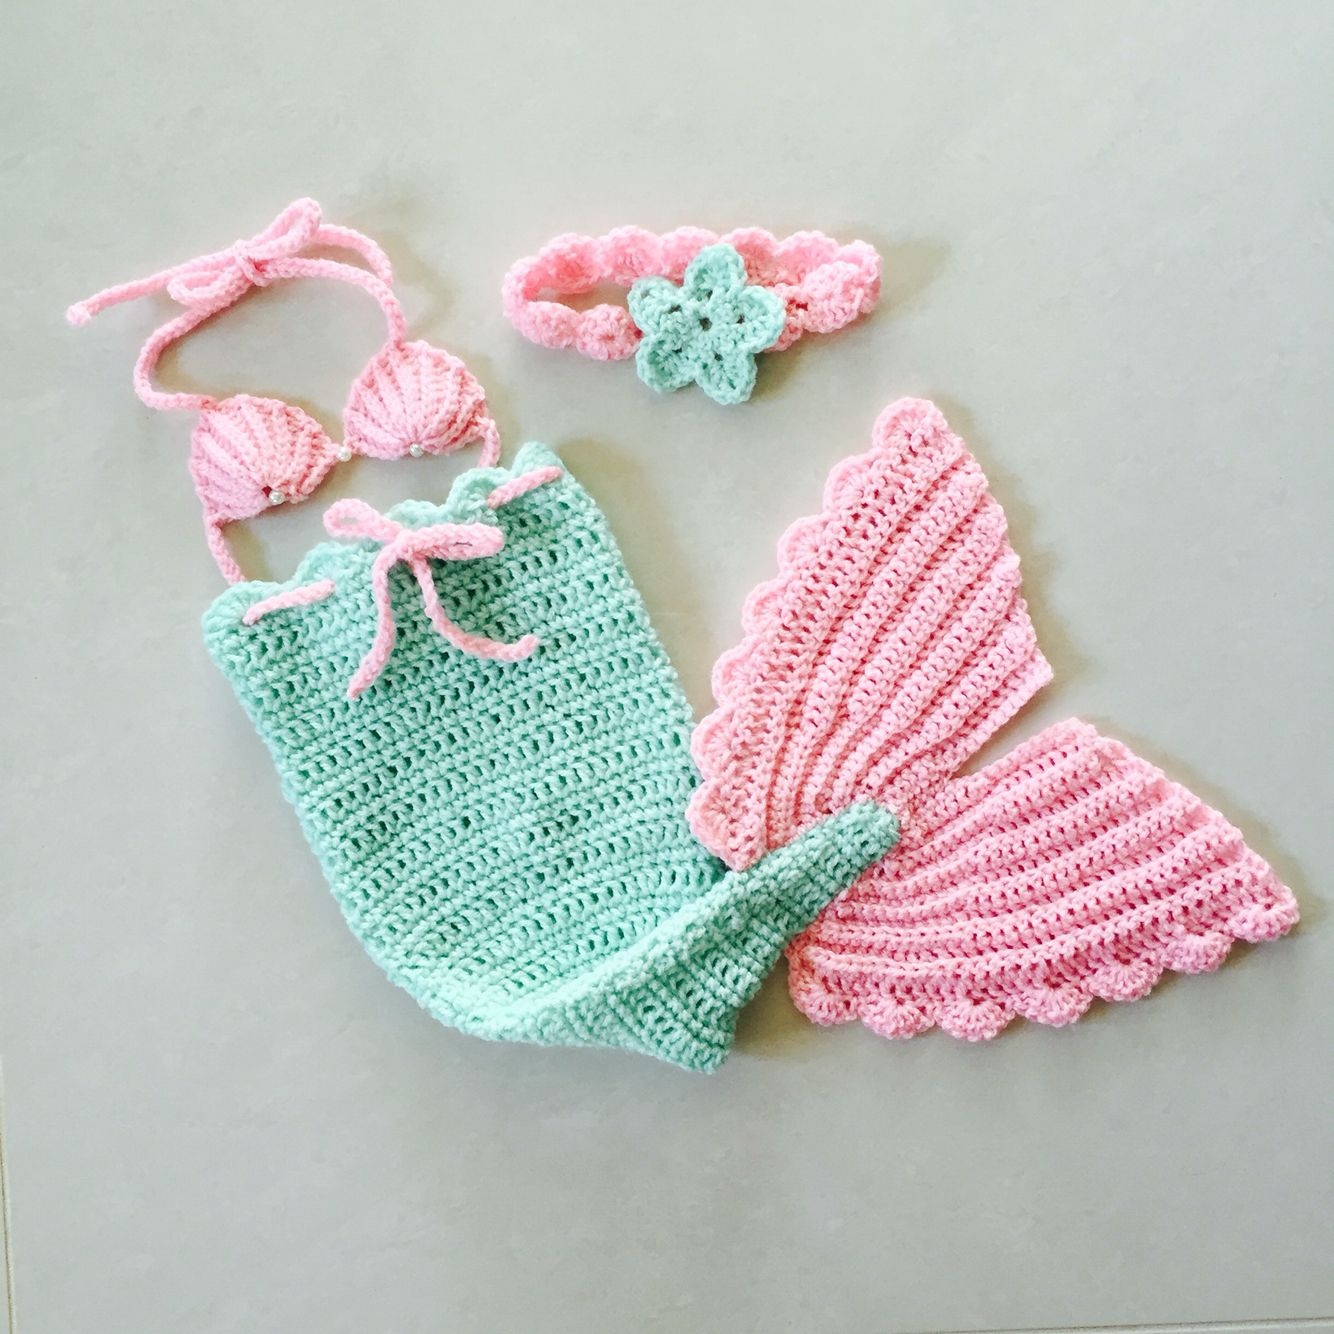 Mermaid Crochet Pattern For Baby Crochet Newborn Mermaid Costume Crochet And Crafts Pinterest